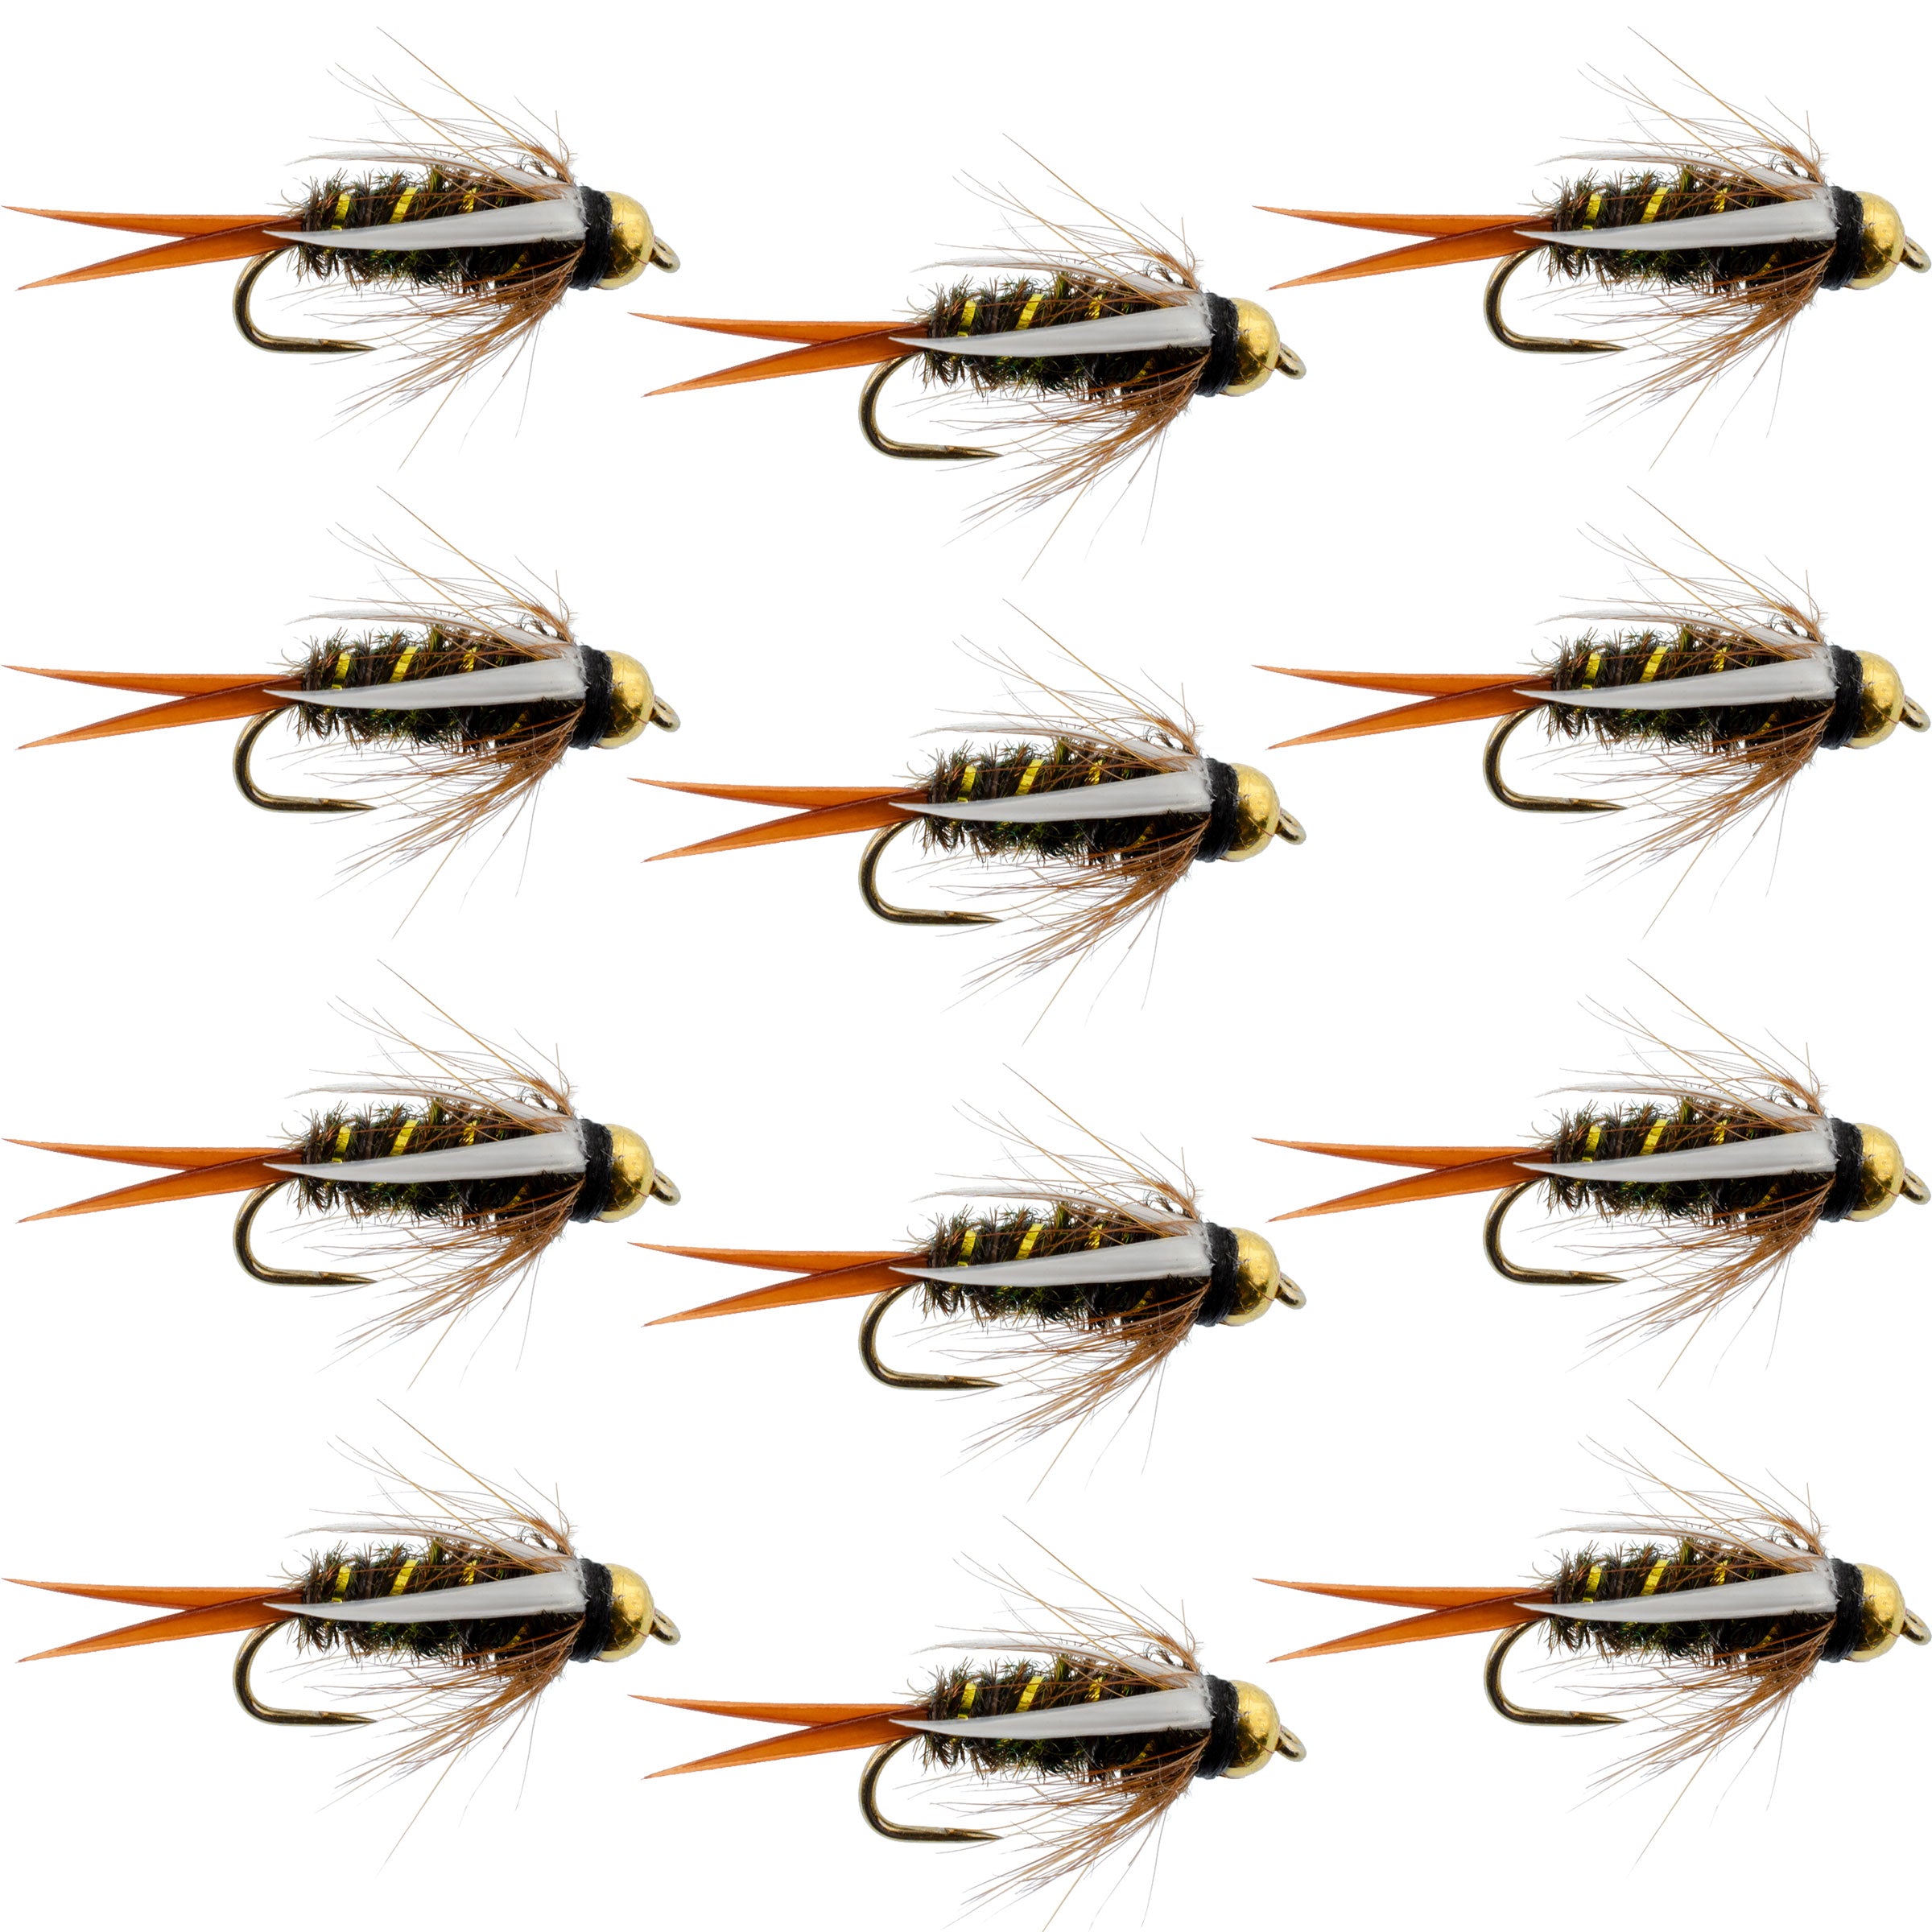 Barbless Bead Head Prince Nymph Fly Fishing Flies - 1 Dozen Flies Hook Size 16